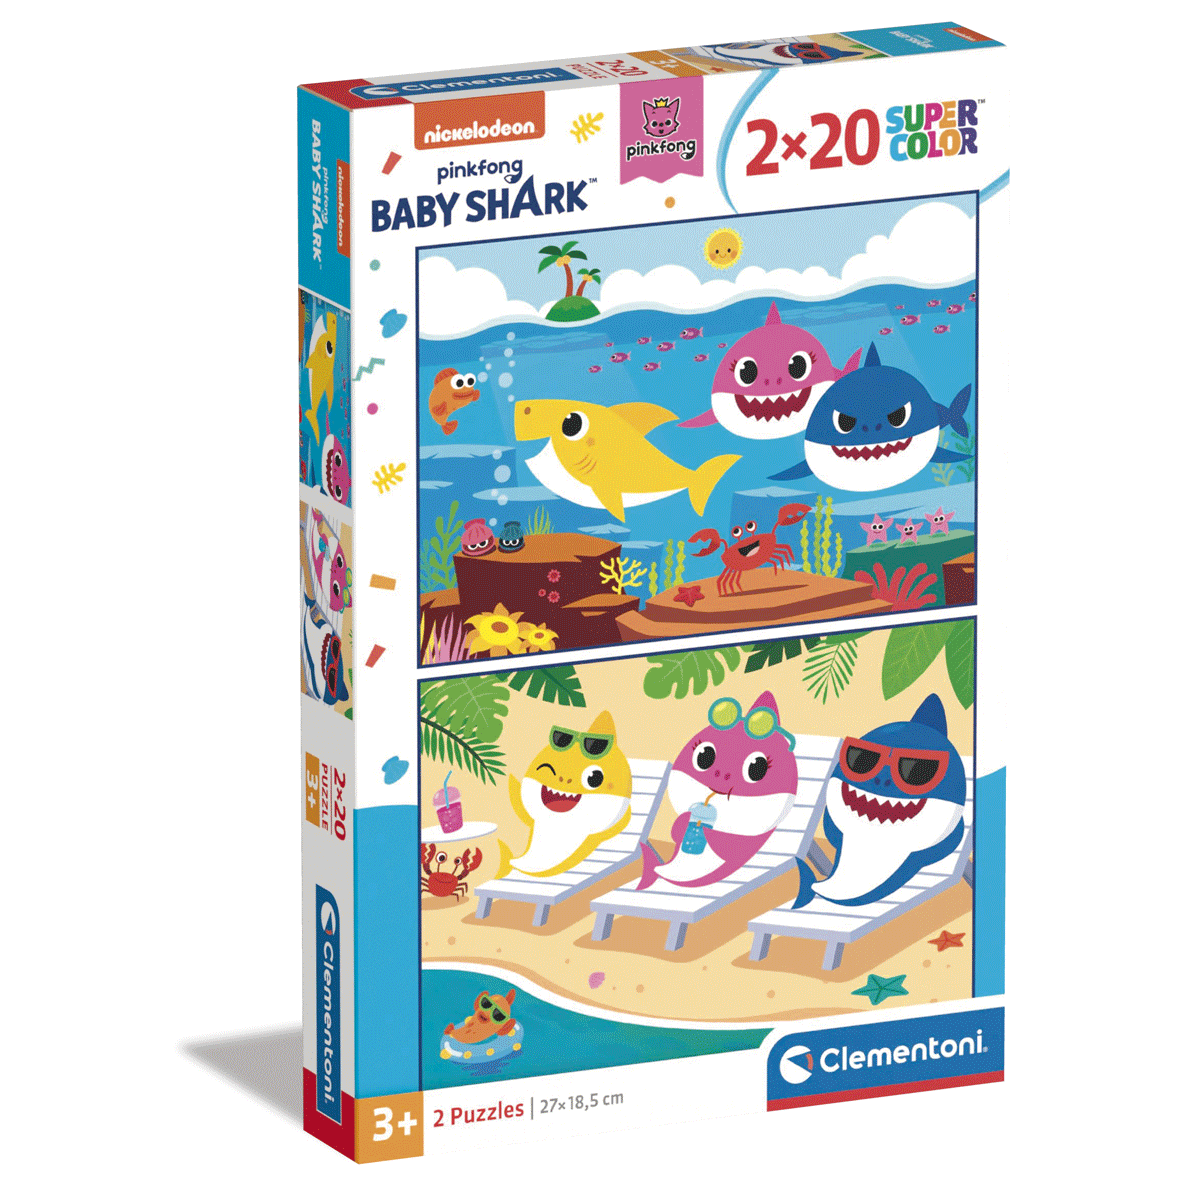 Clementoni supercolor puzzle baby shark - 2x20 pezzi, puzzle bambini 3 anni - CLEMENTONI